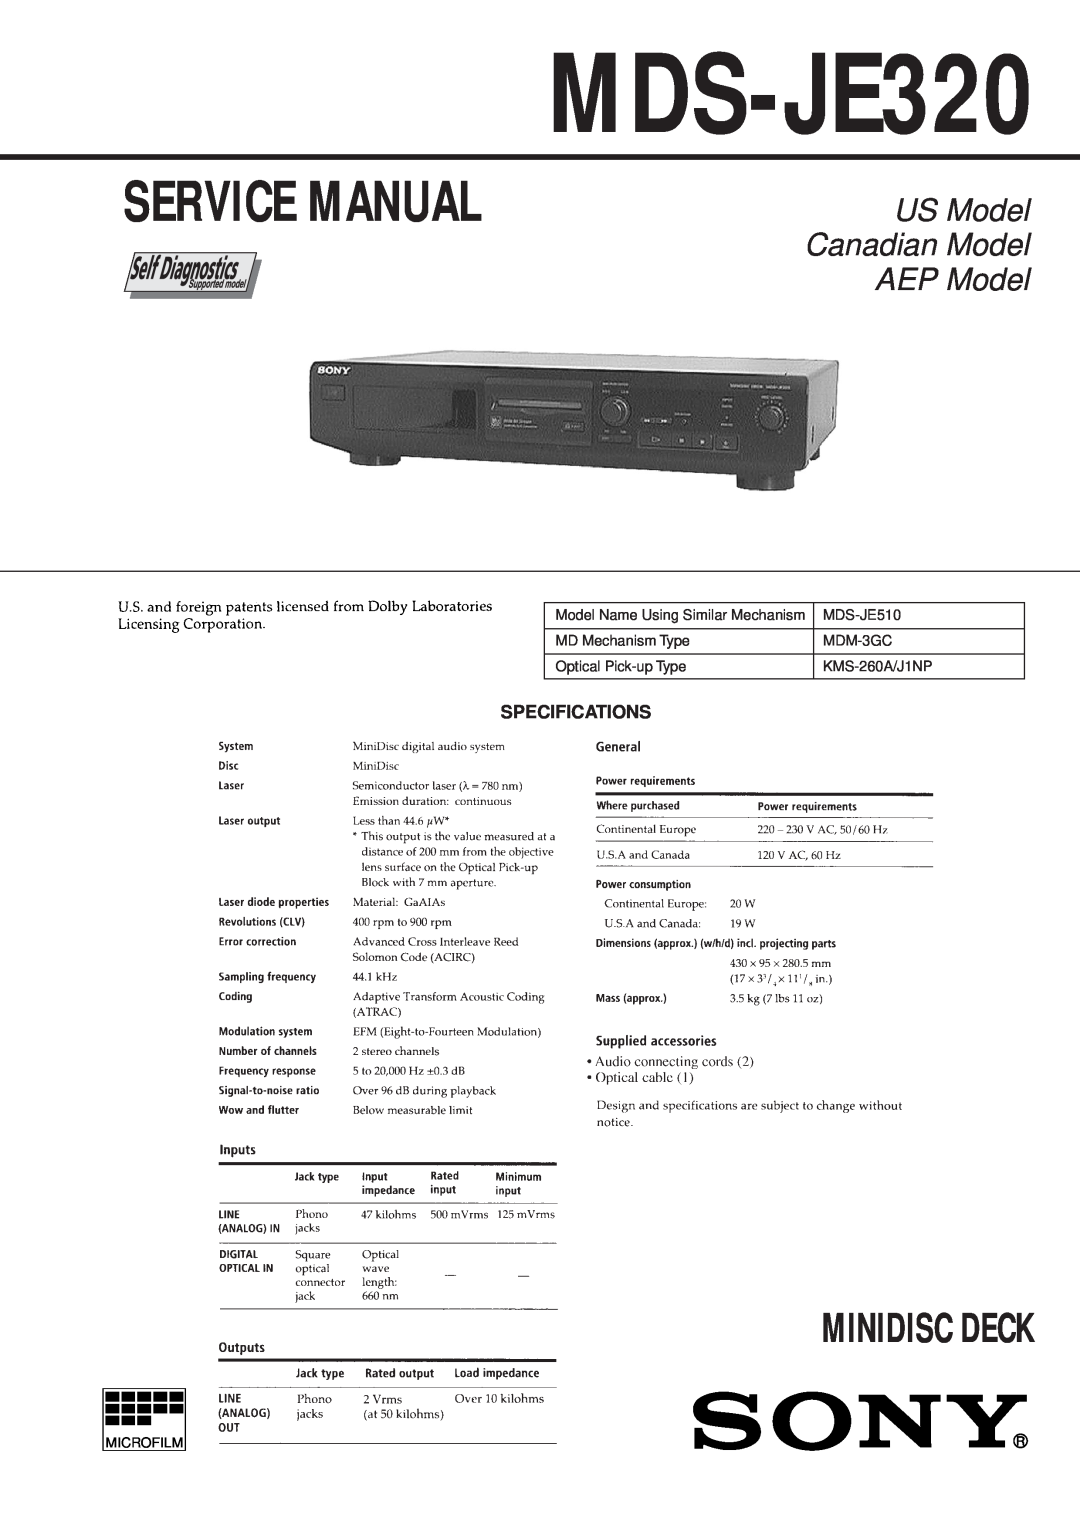 Sony MDS-JD320 service manual Specifications, MDS-JE320, Minidisc Deck, US Model Canadian Model AEP Model 